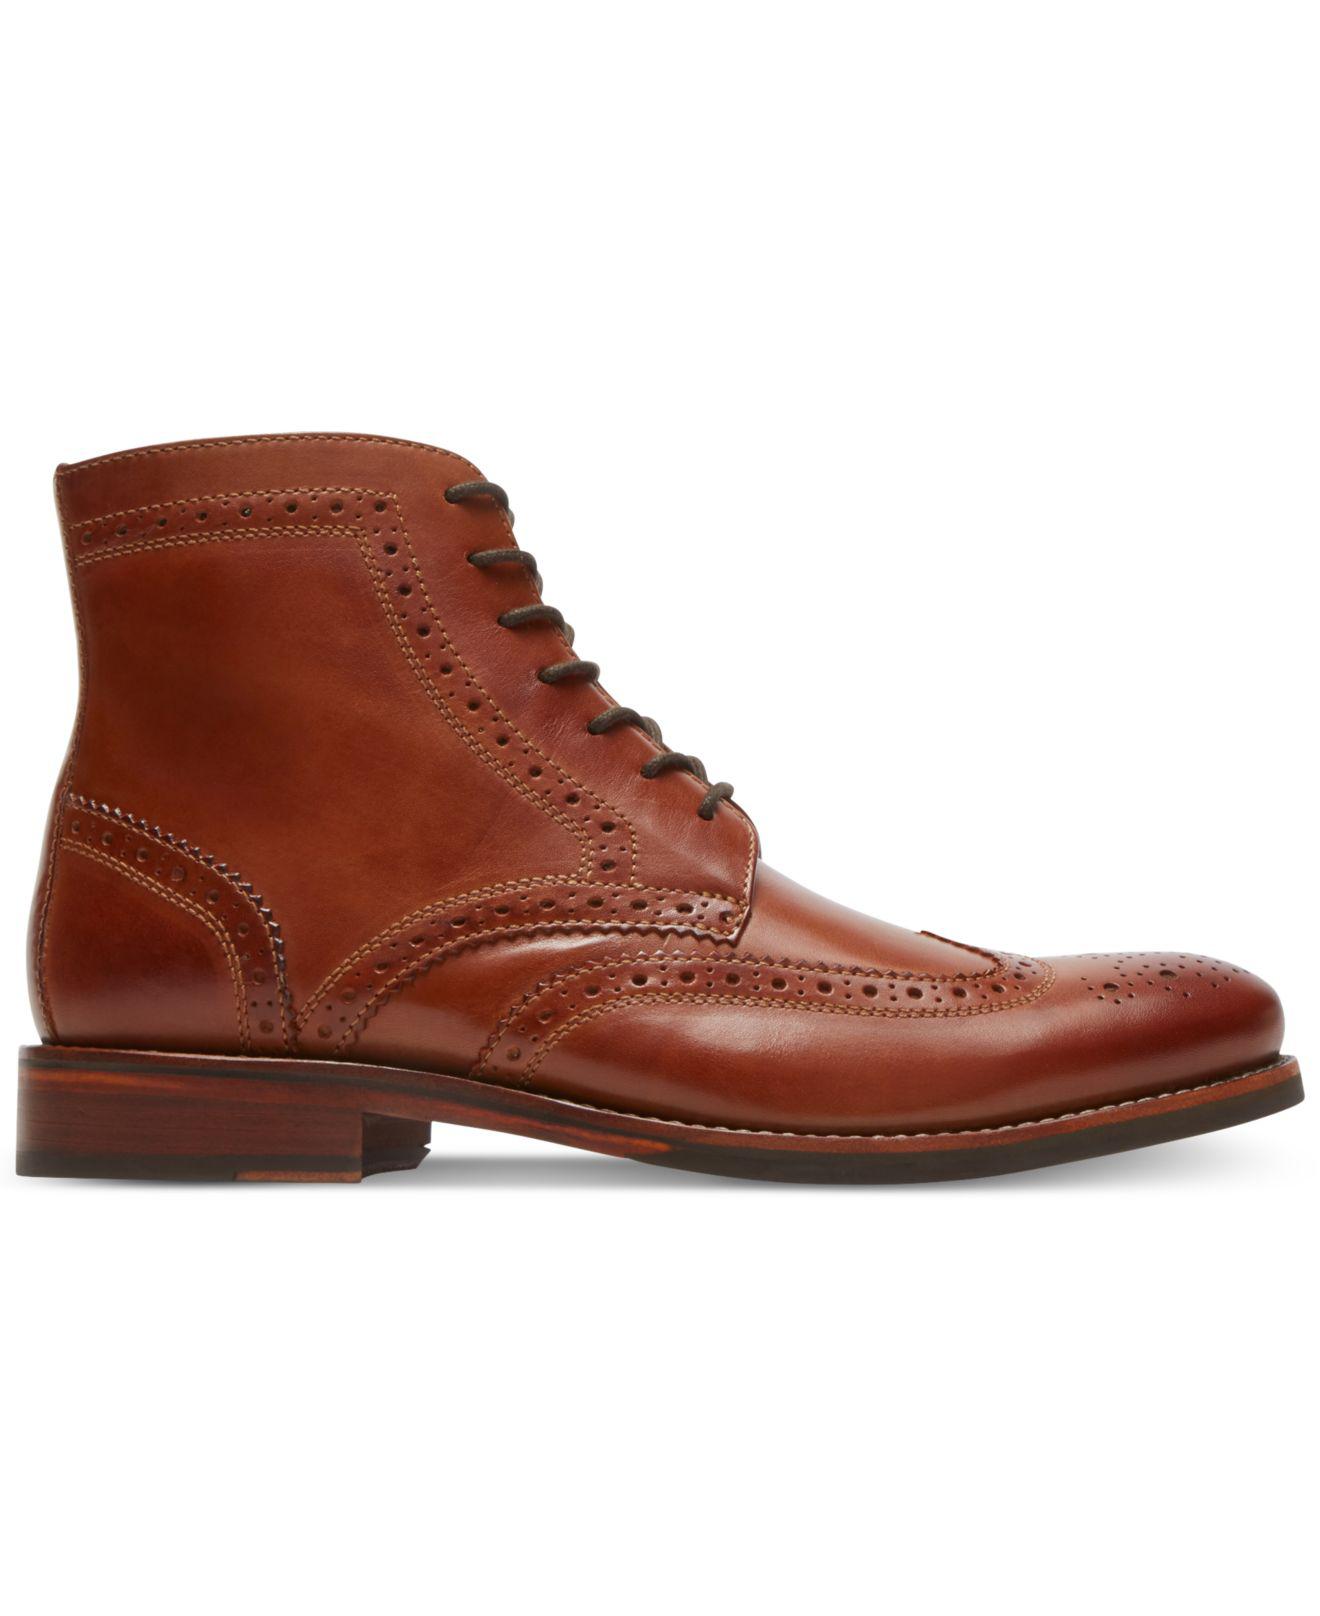 Rockport Leather Men's Wyat Wingtip Boots in Cognac (Brown) for Men - Lyst